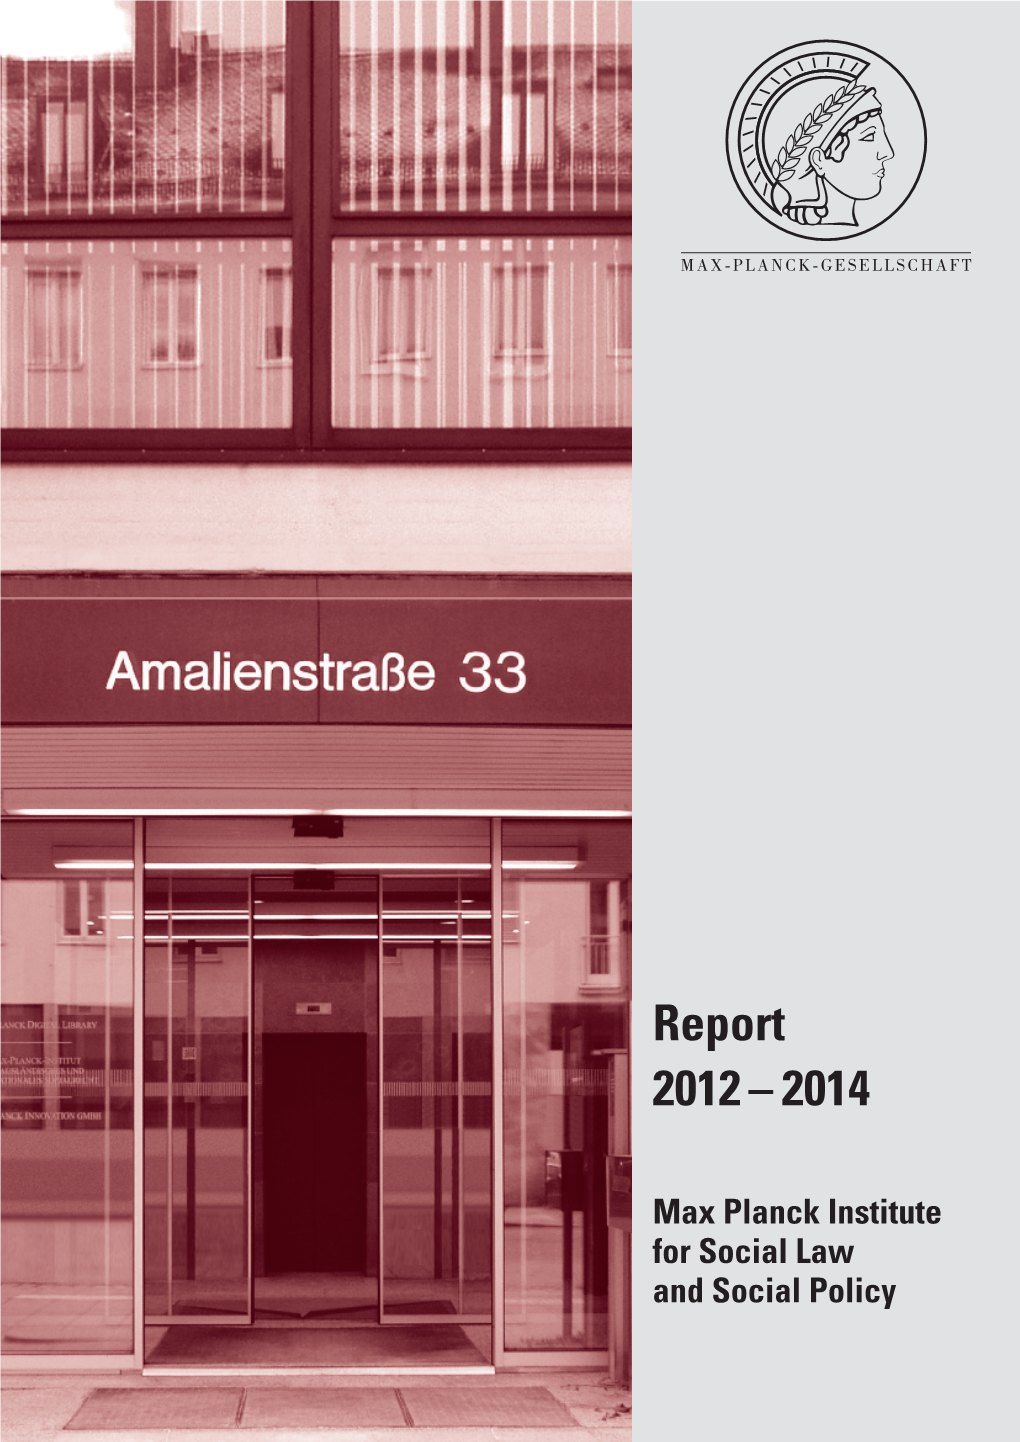 Report 2012 – 2014